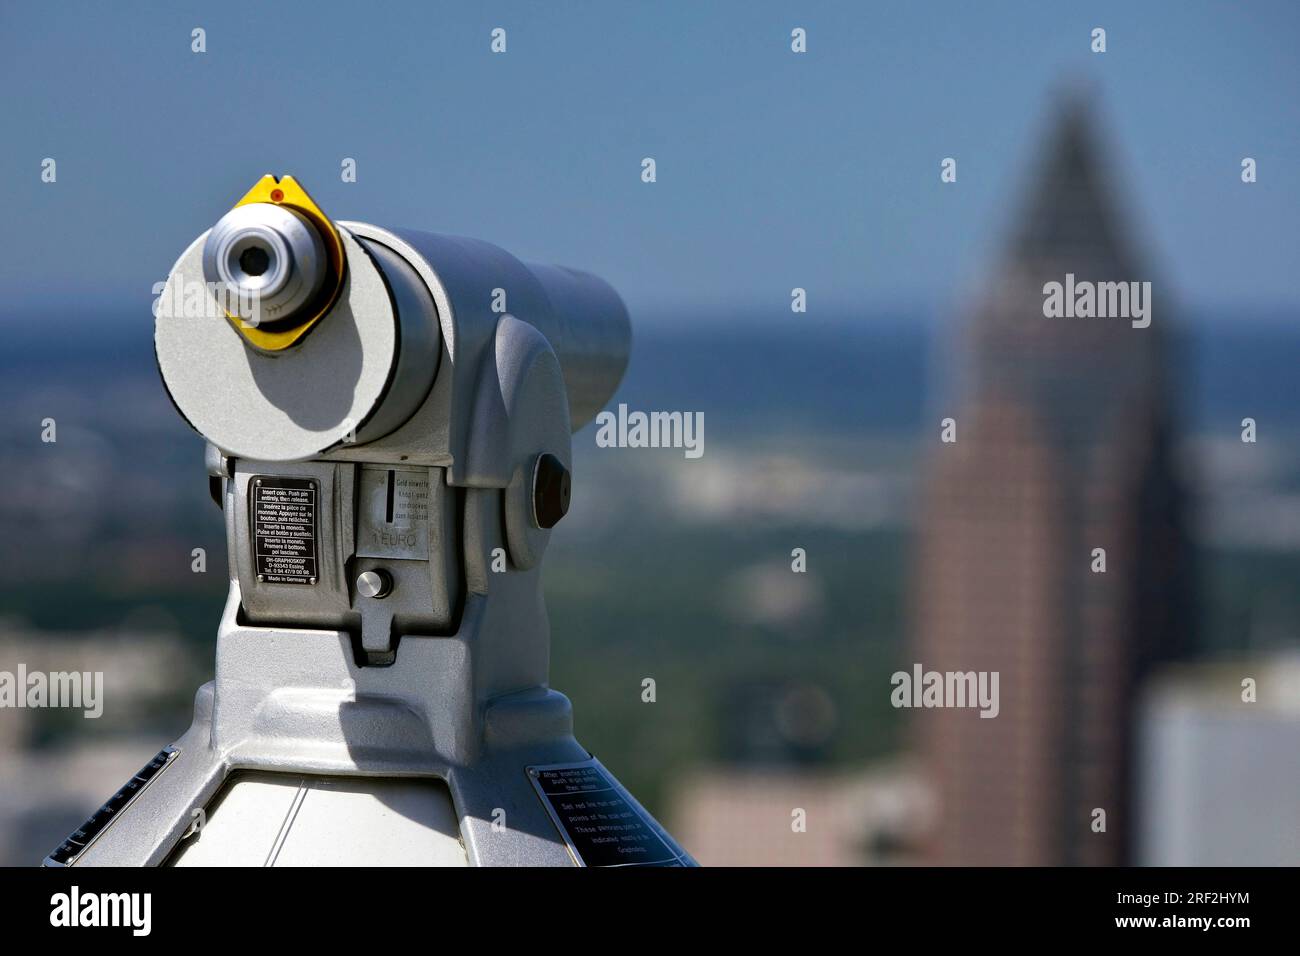 coin-operated telescope, Frankfurt landmark tower in the background, Germany, Hesse, Frankfurt am Main Stock Photo